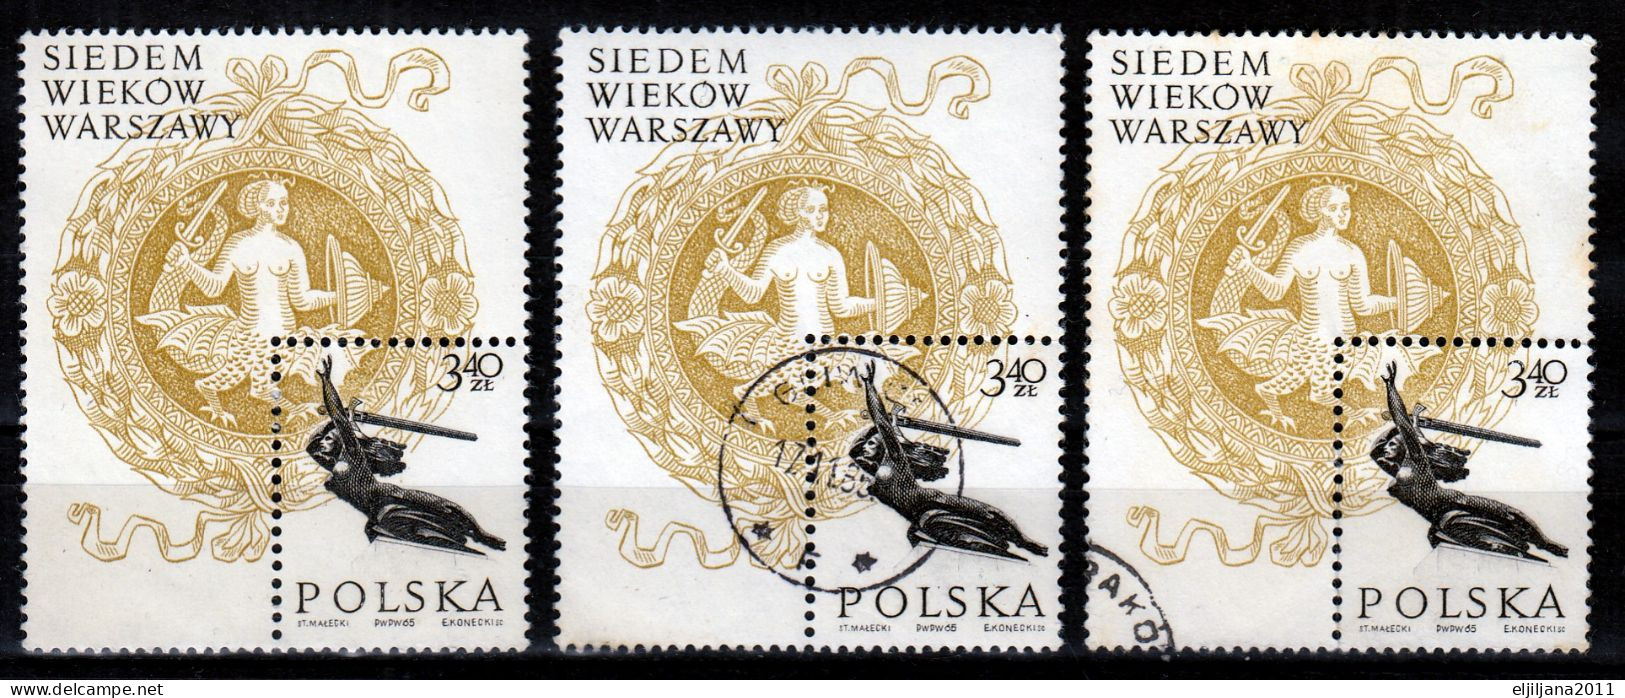 ⁕ Poland / Polska 1965 ⁕ 700th Anniversary Of Warsaw Mi.1605 Block 37 ⁕ 3v (MNH & Used) - Gebruikt